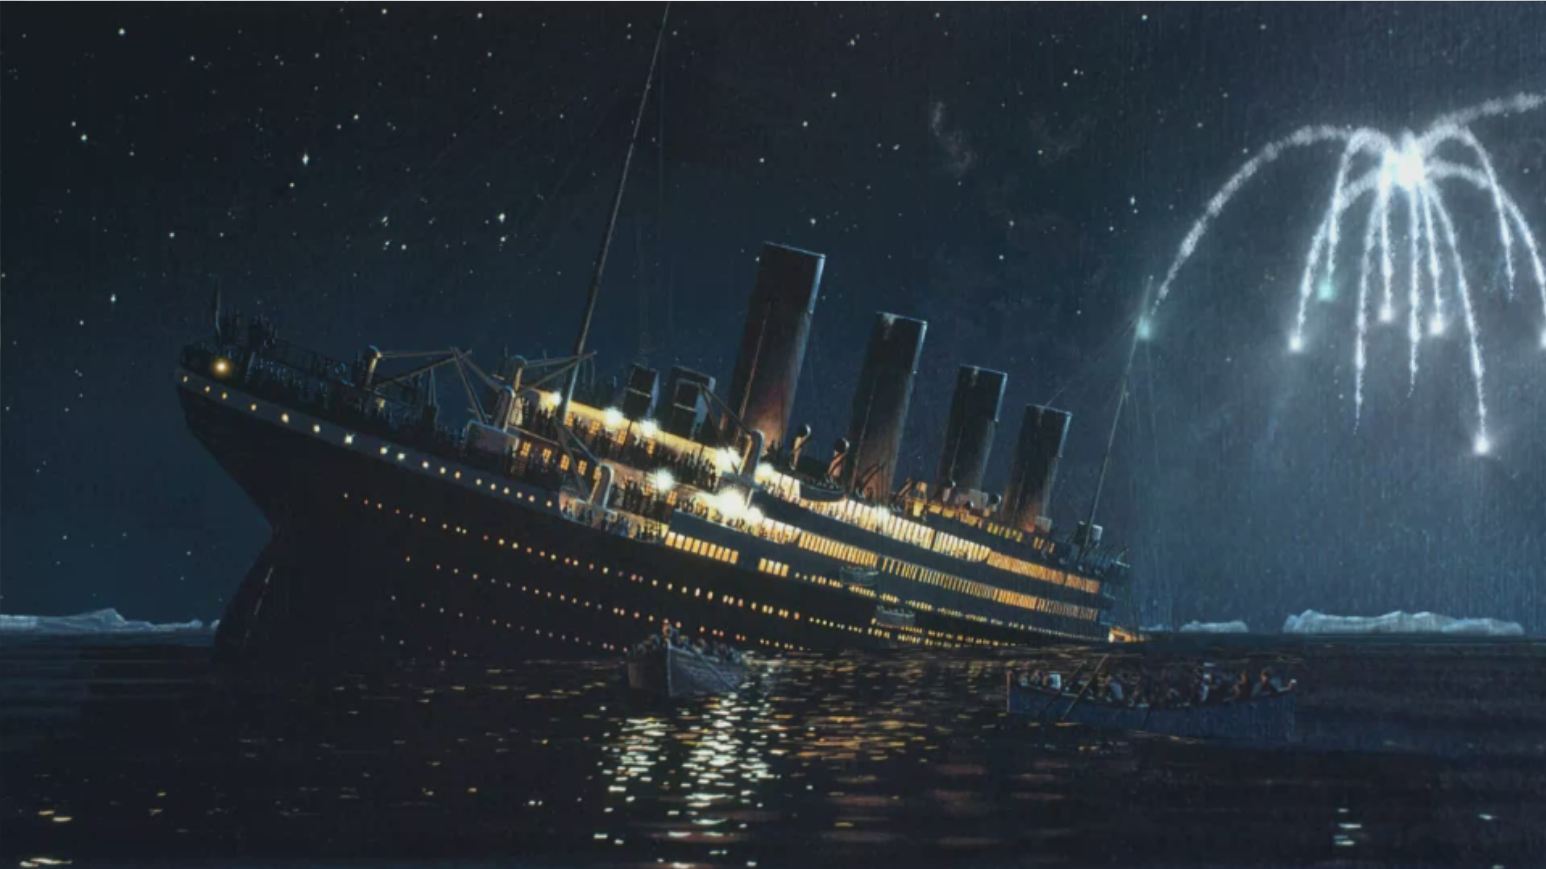 Wallpaperres.com | Titanic Sinking Image 02